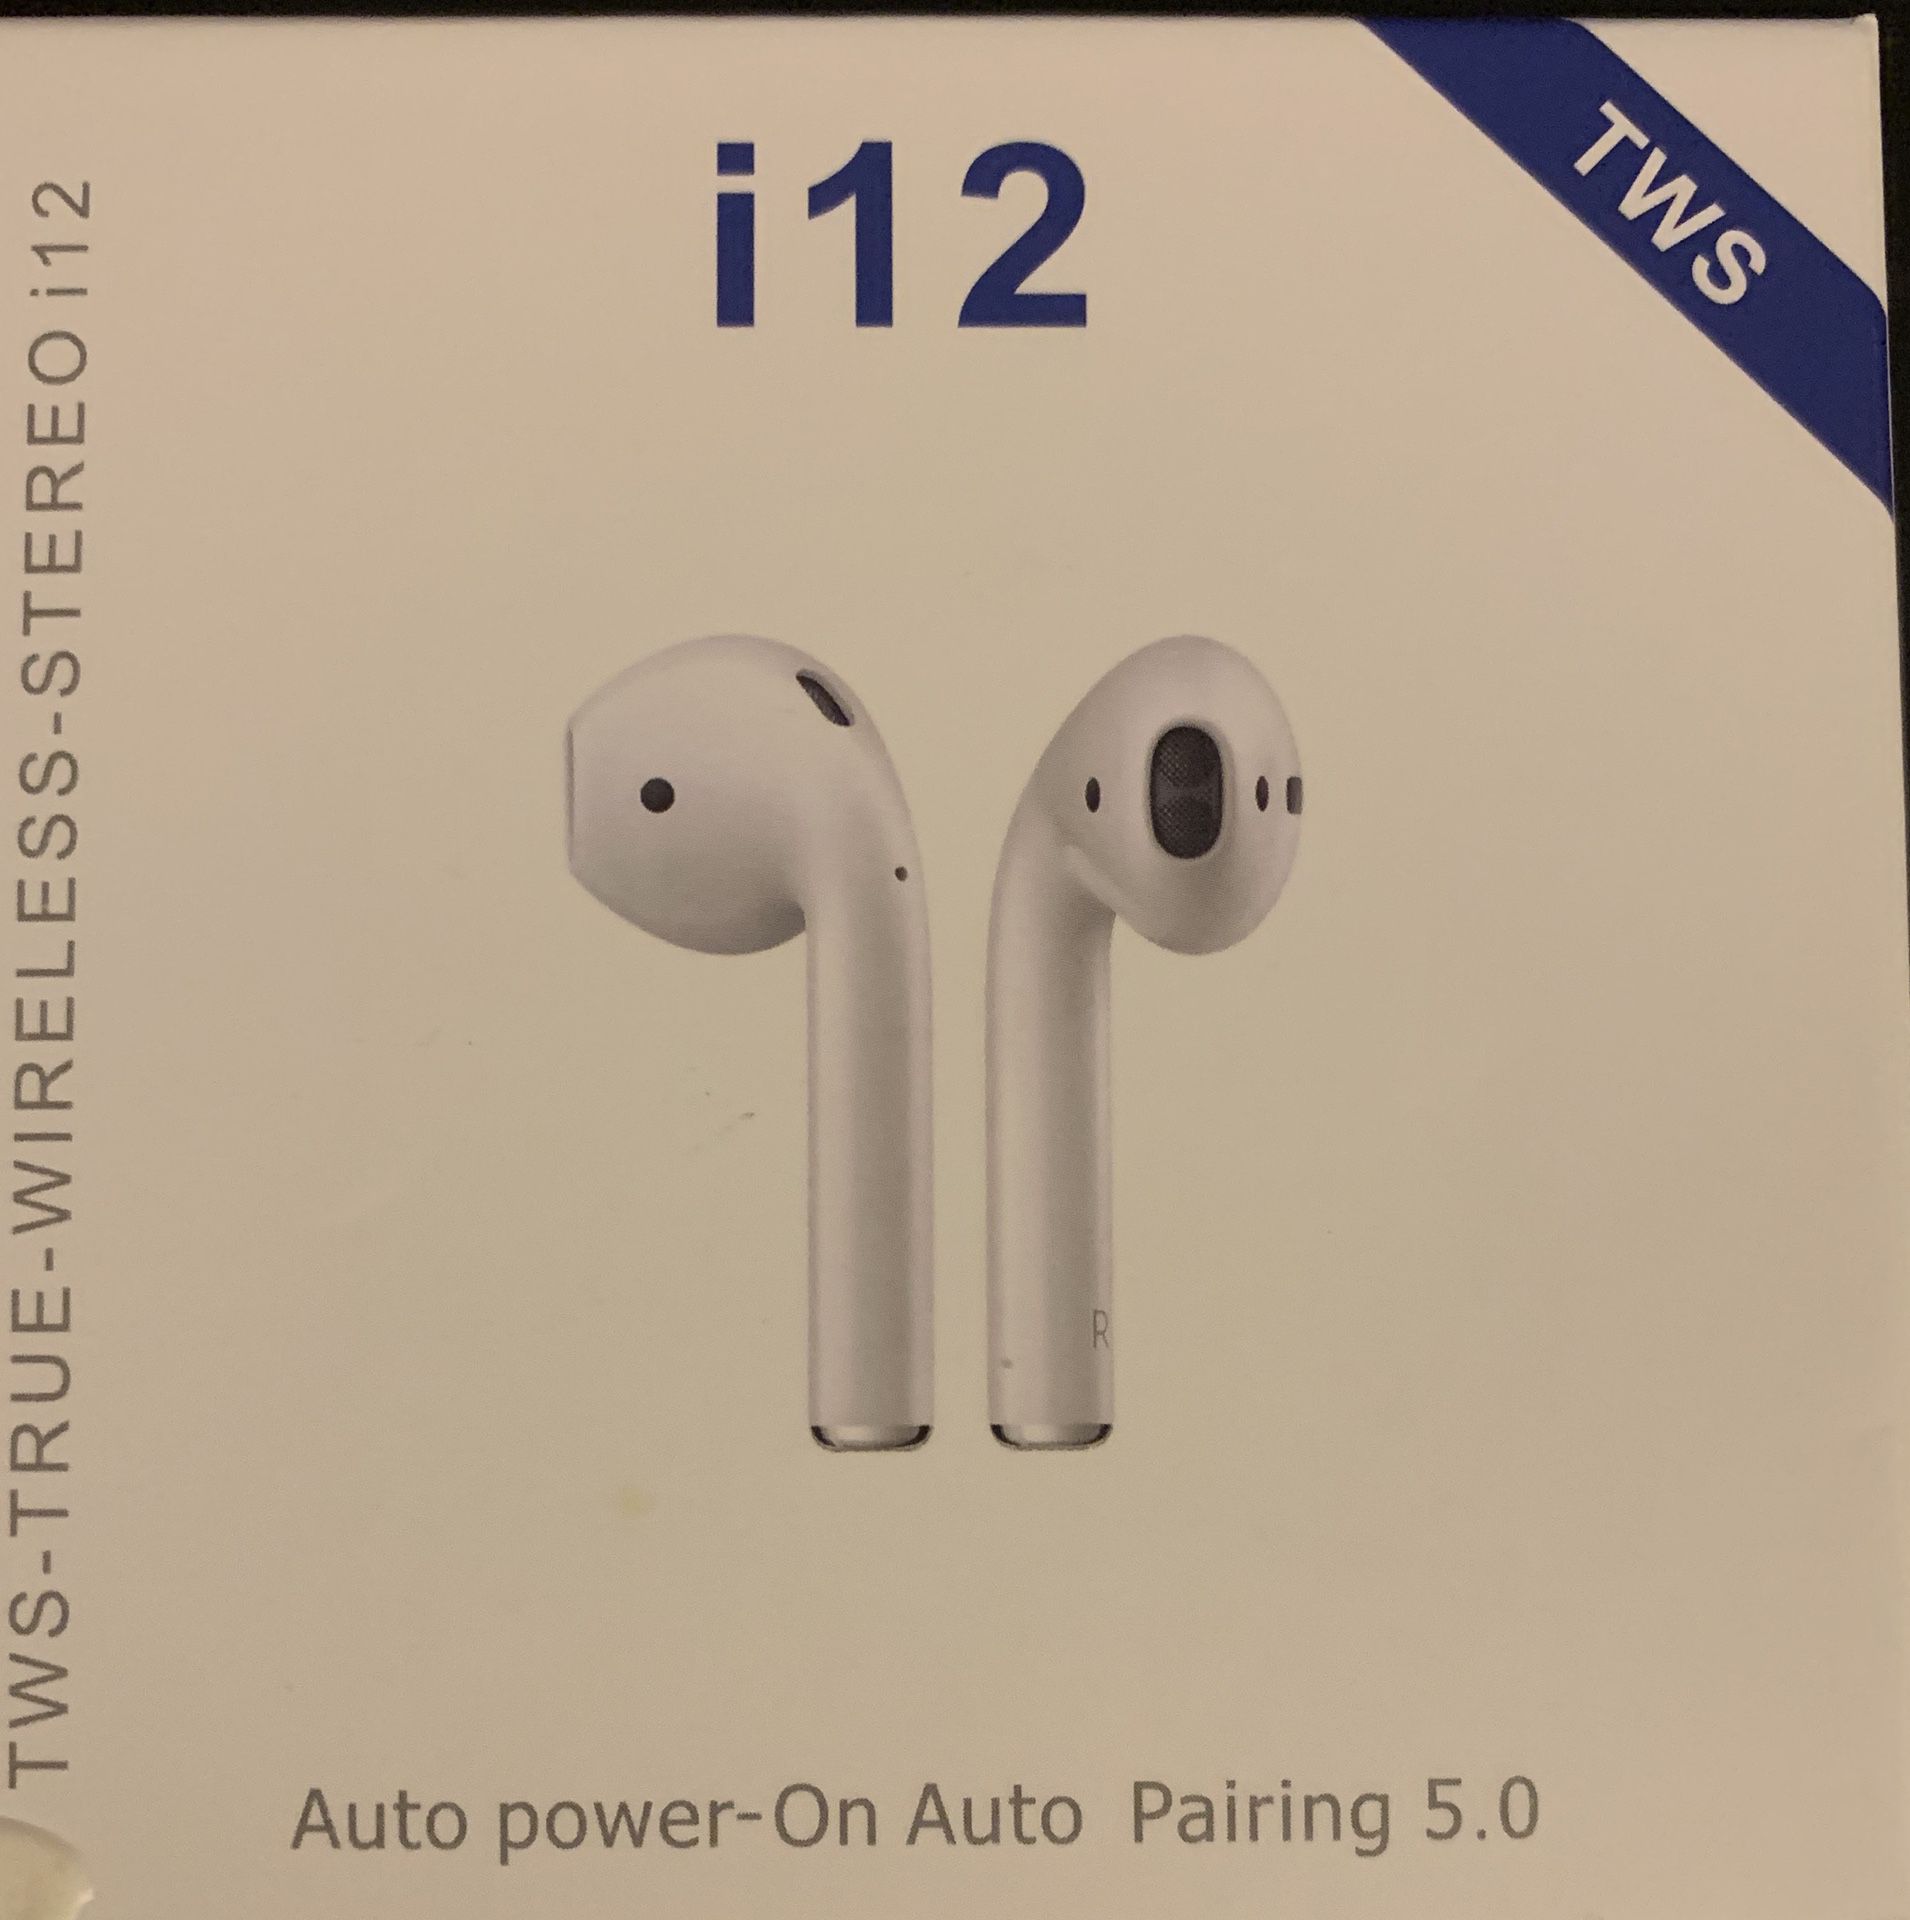 I12 Wireless Earbuds Bluetooth Headphones